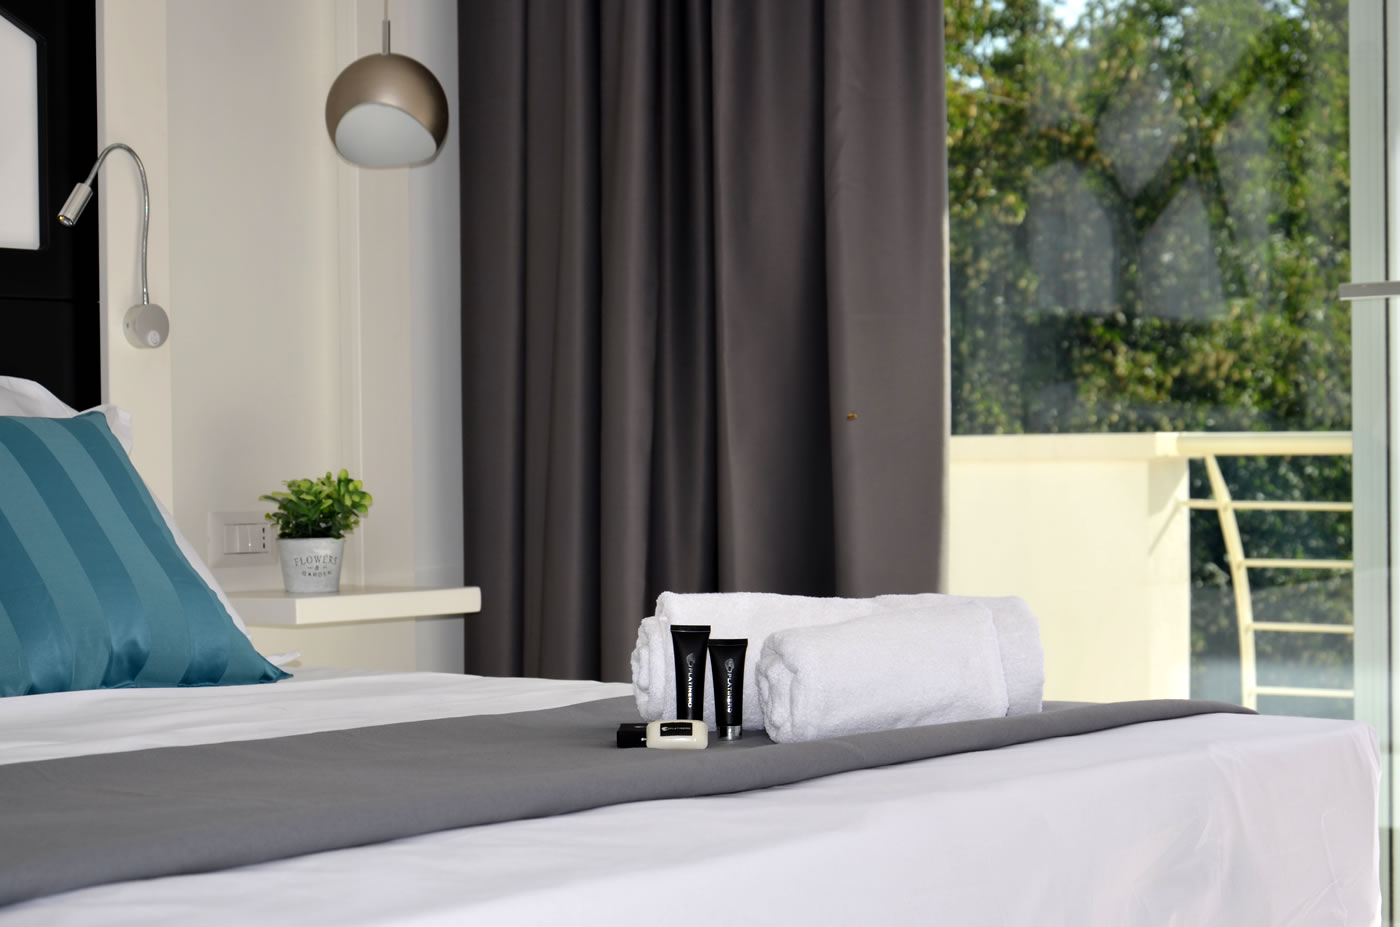 Centurio Luxury Rooms a Tropea